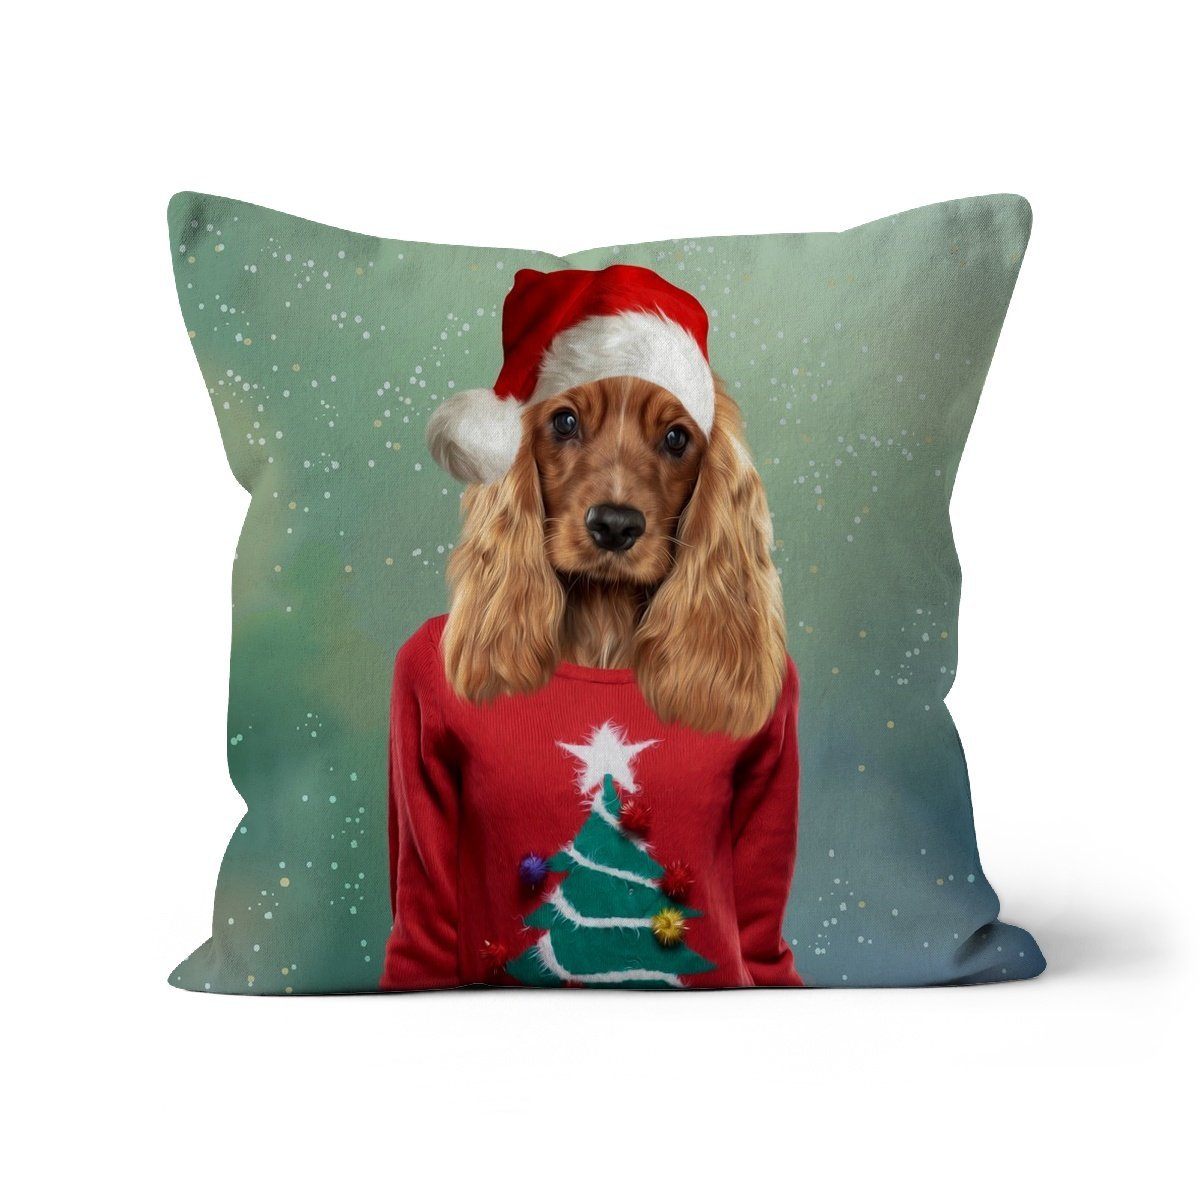 Christmas Jumper Chick: Custom Pet Cushion - Paw & Glory - #pet portraits# - #dog portraits# - #pet portraits uk#paw and glory, custom pet portrait cushion,pet custom pillow, pillows of your dog, custom pillow of pet, dog on pillow, dog photo on pillow